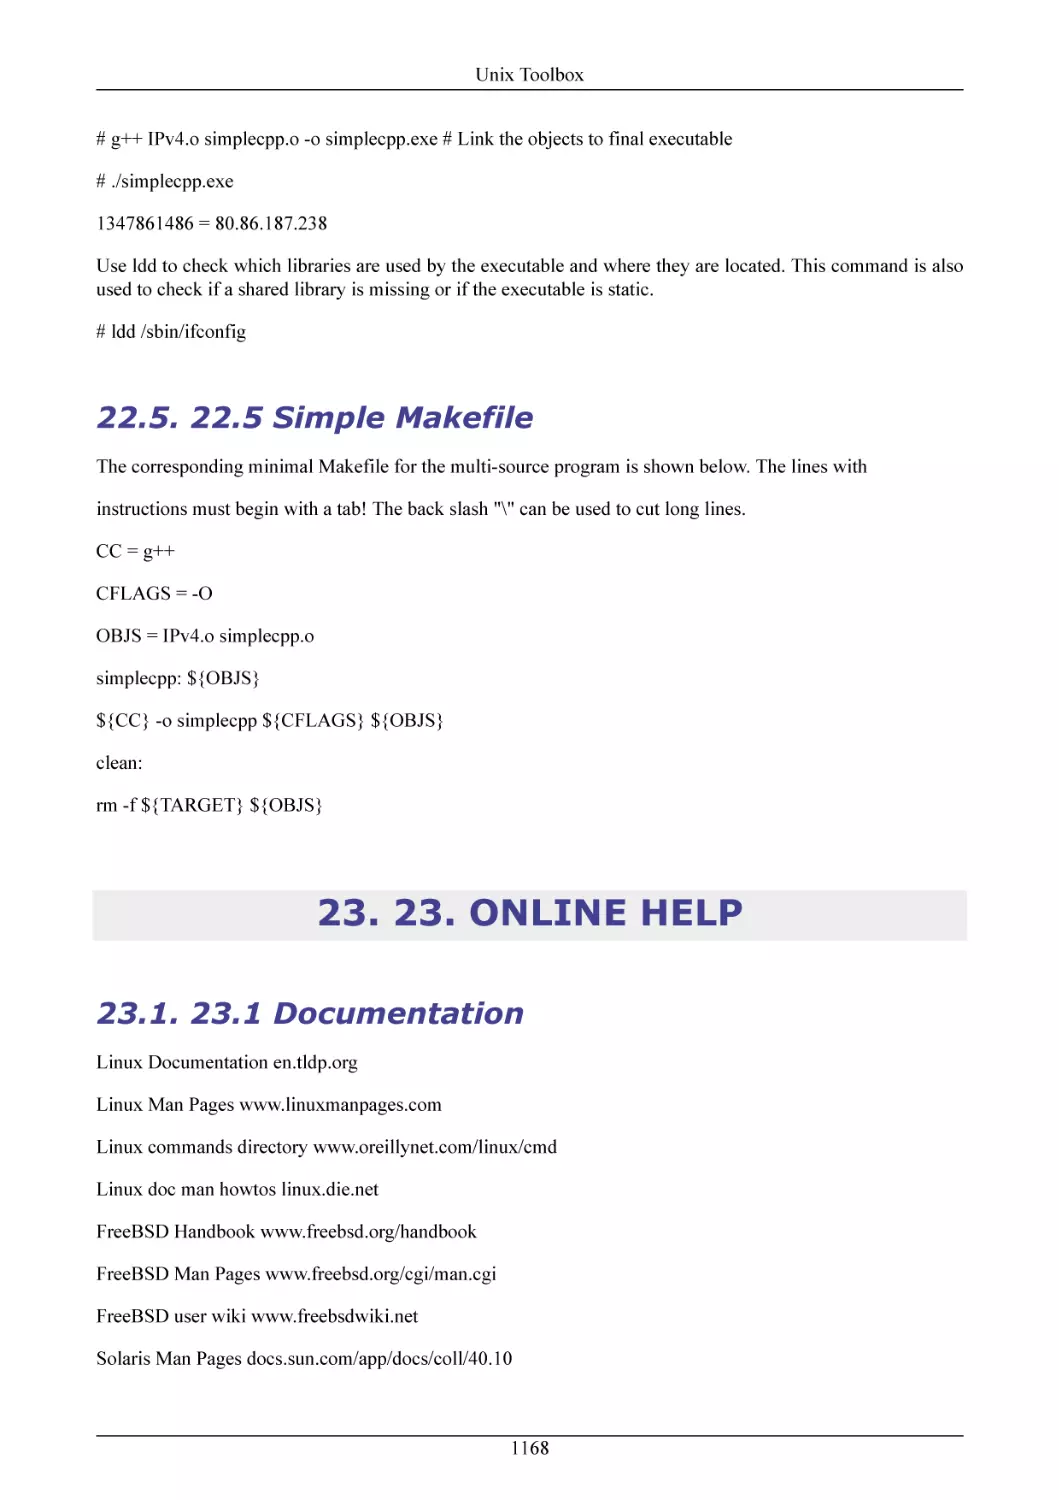 22.5 Simple Makefile
23. ONLINE HELP
23.1 Documentation